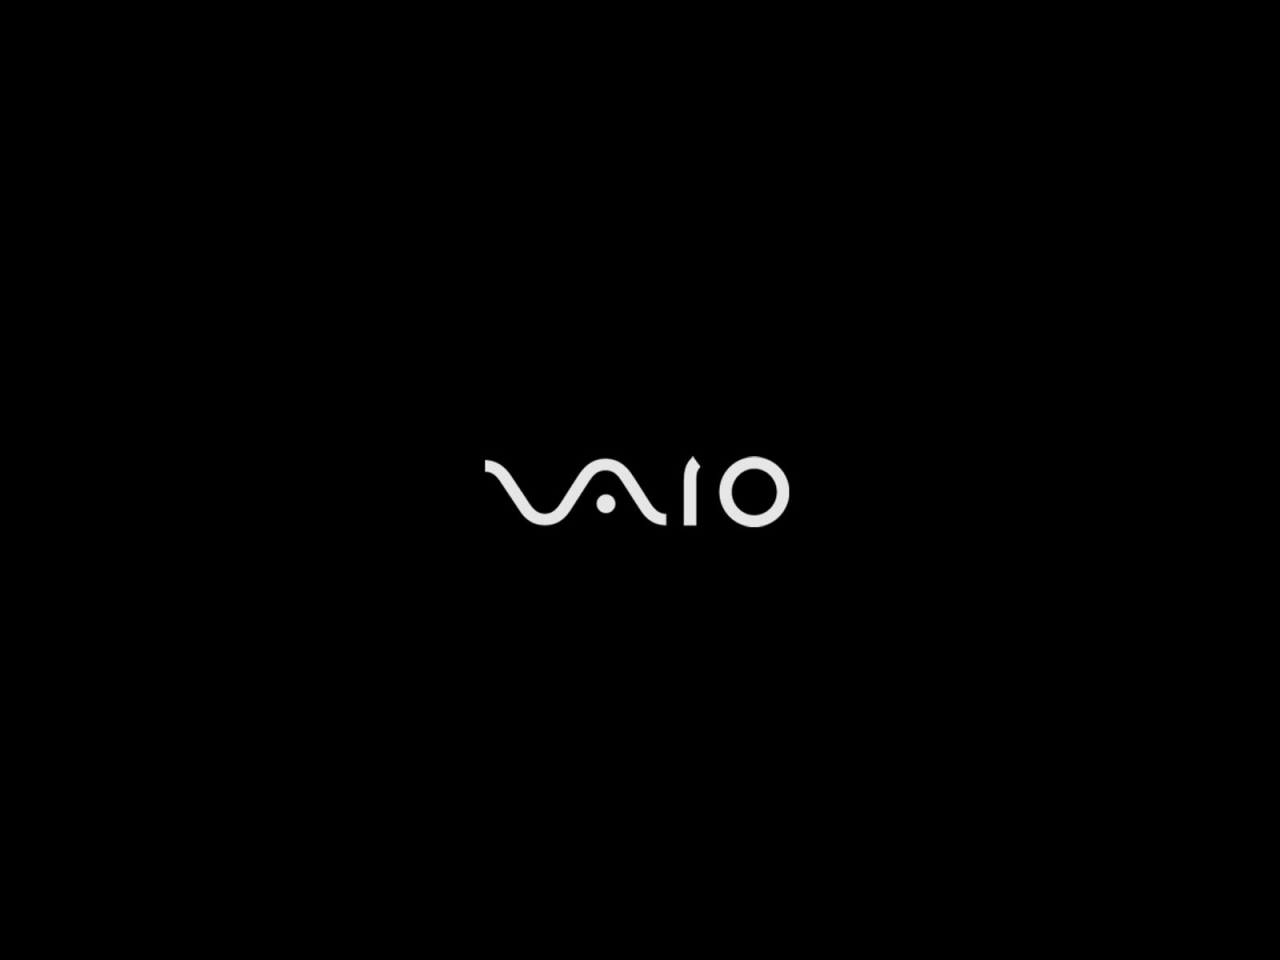 Vaio Black for 1280 x 960 resolution